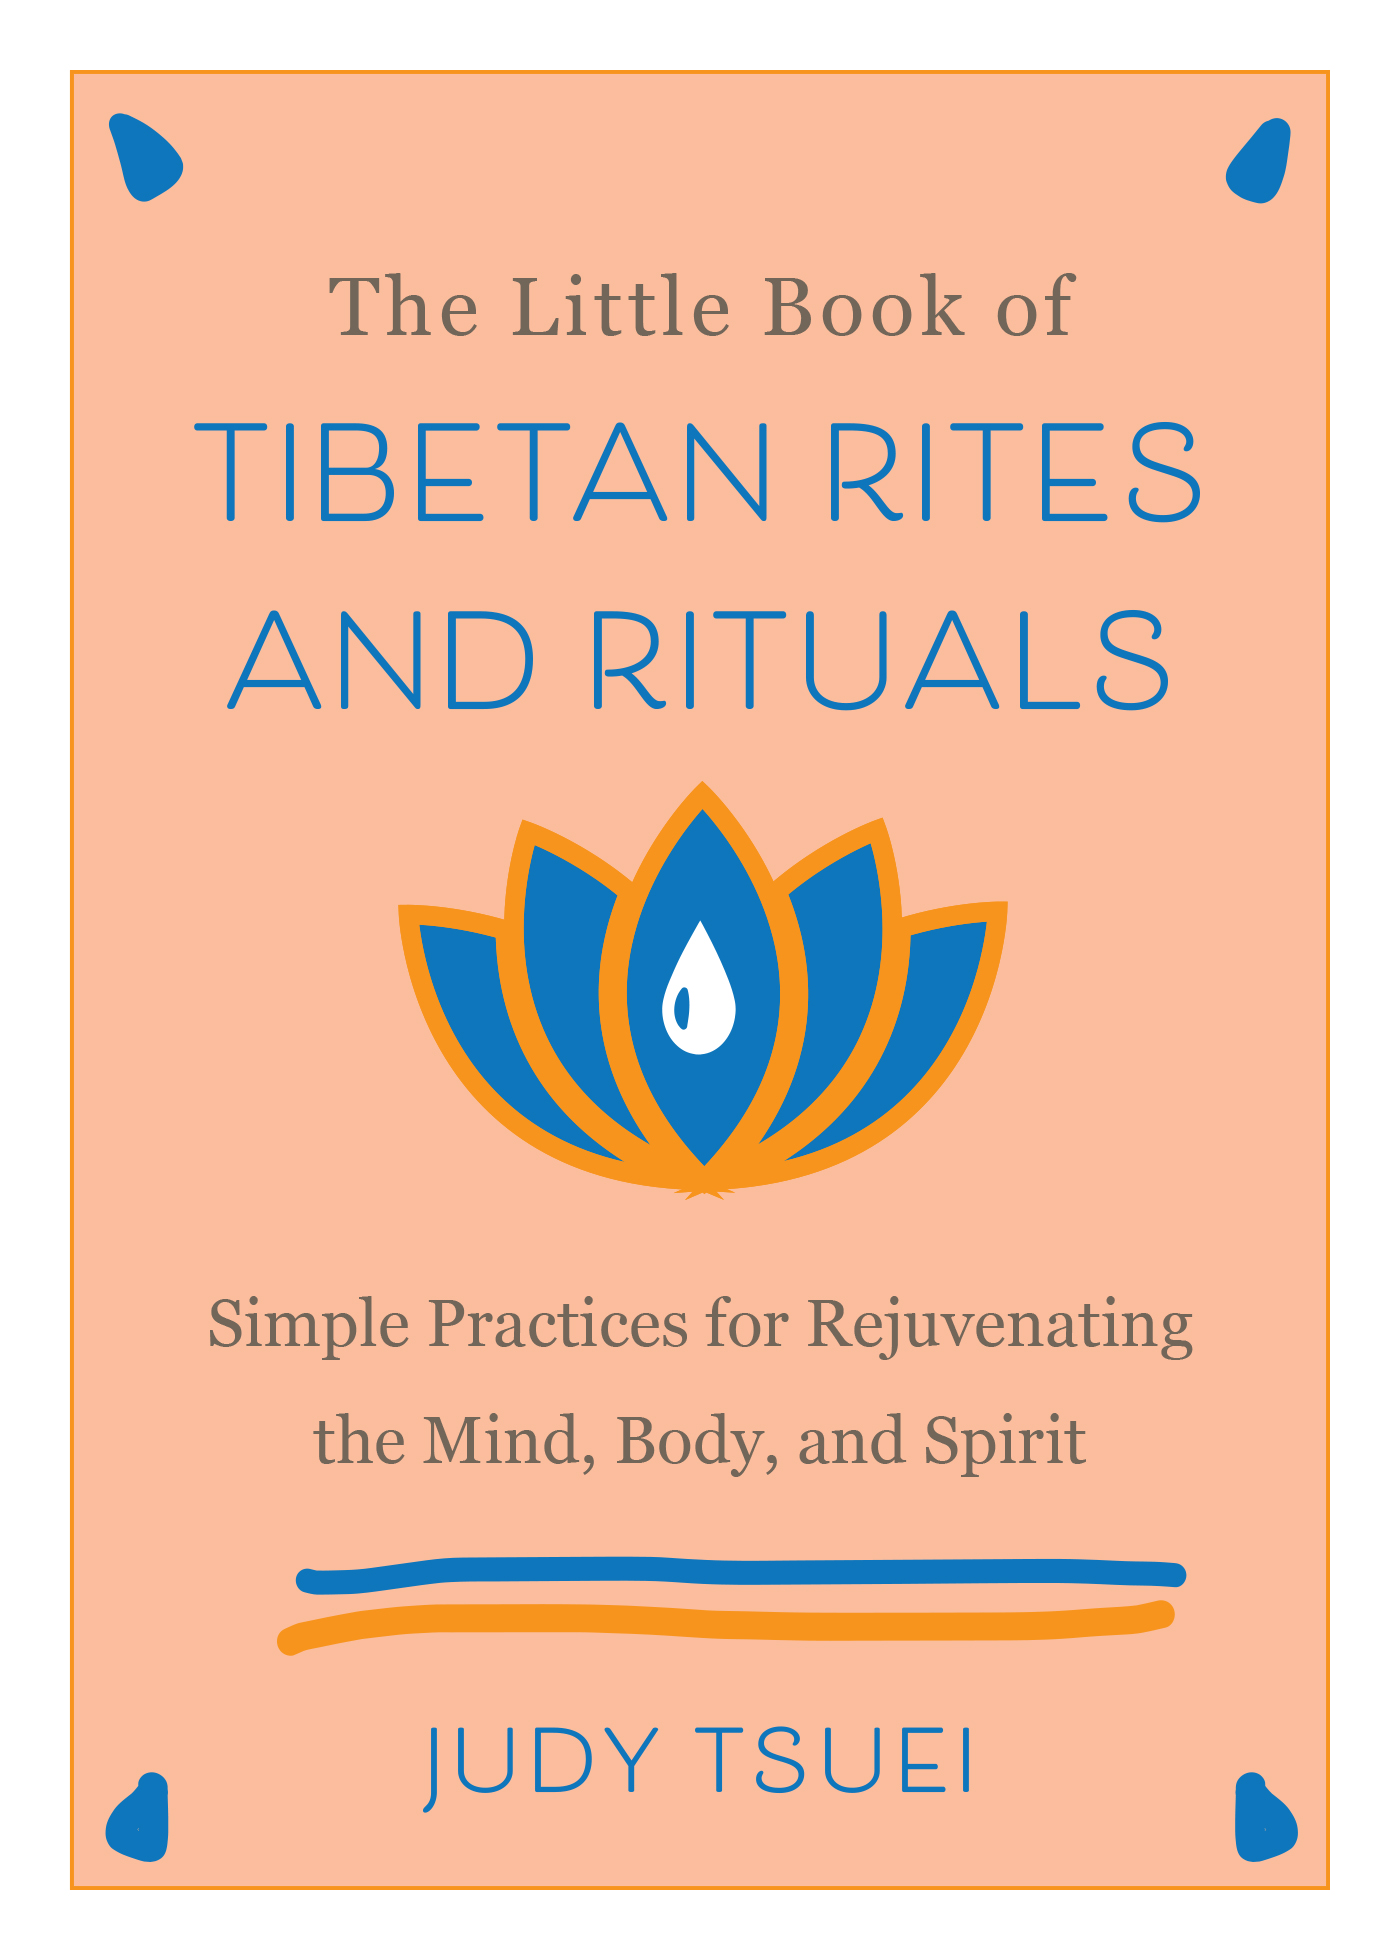 Little Book of Tibetan Rites-front.indd